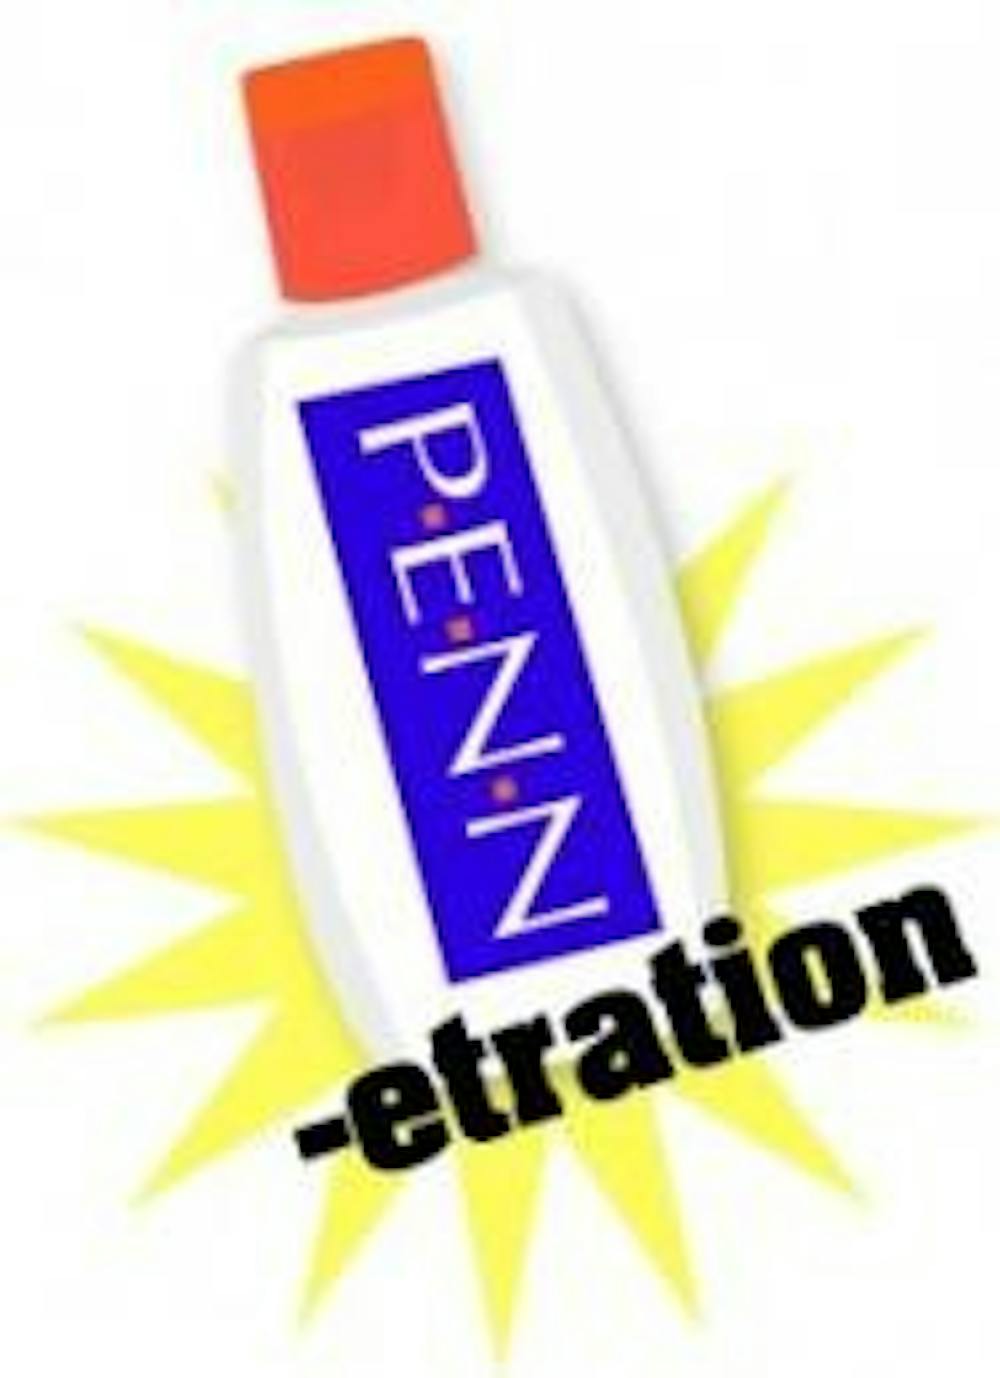 pennetration